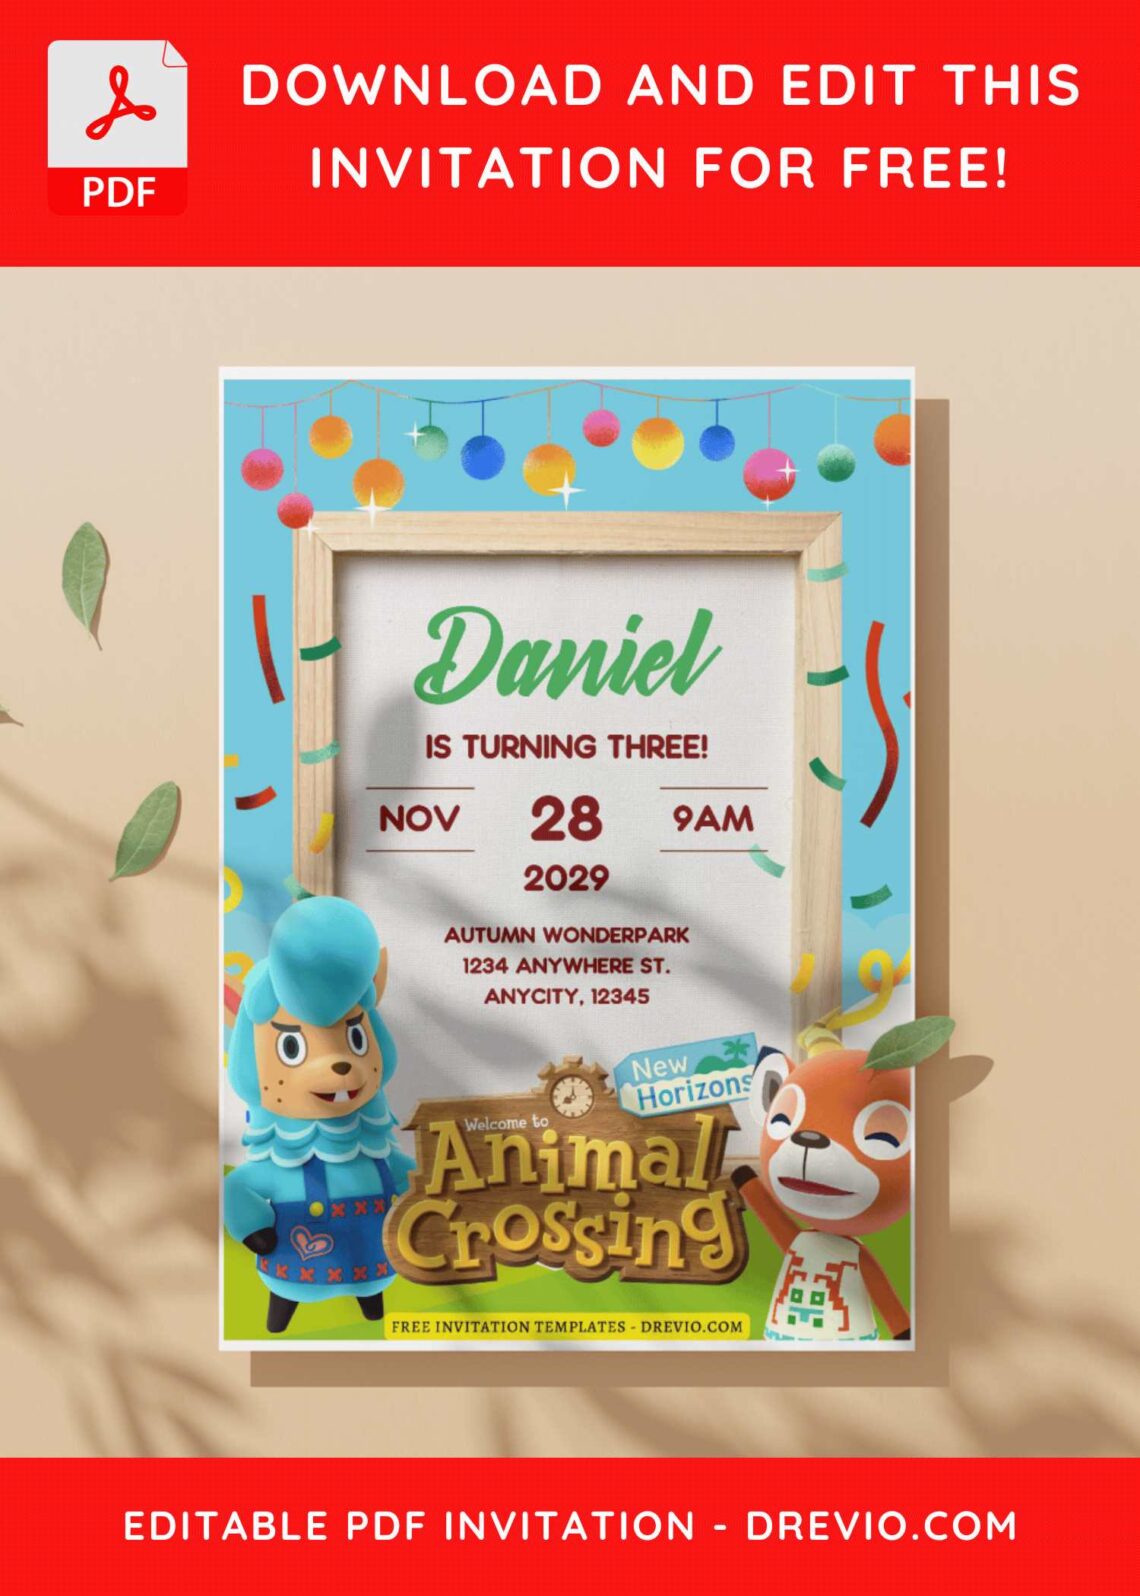 (Free Editable PDF) Festive Animal Crossing Birthday Invitation Templates I